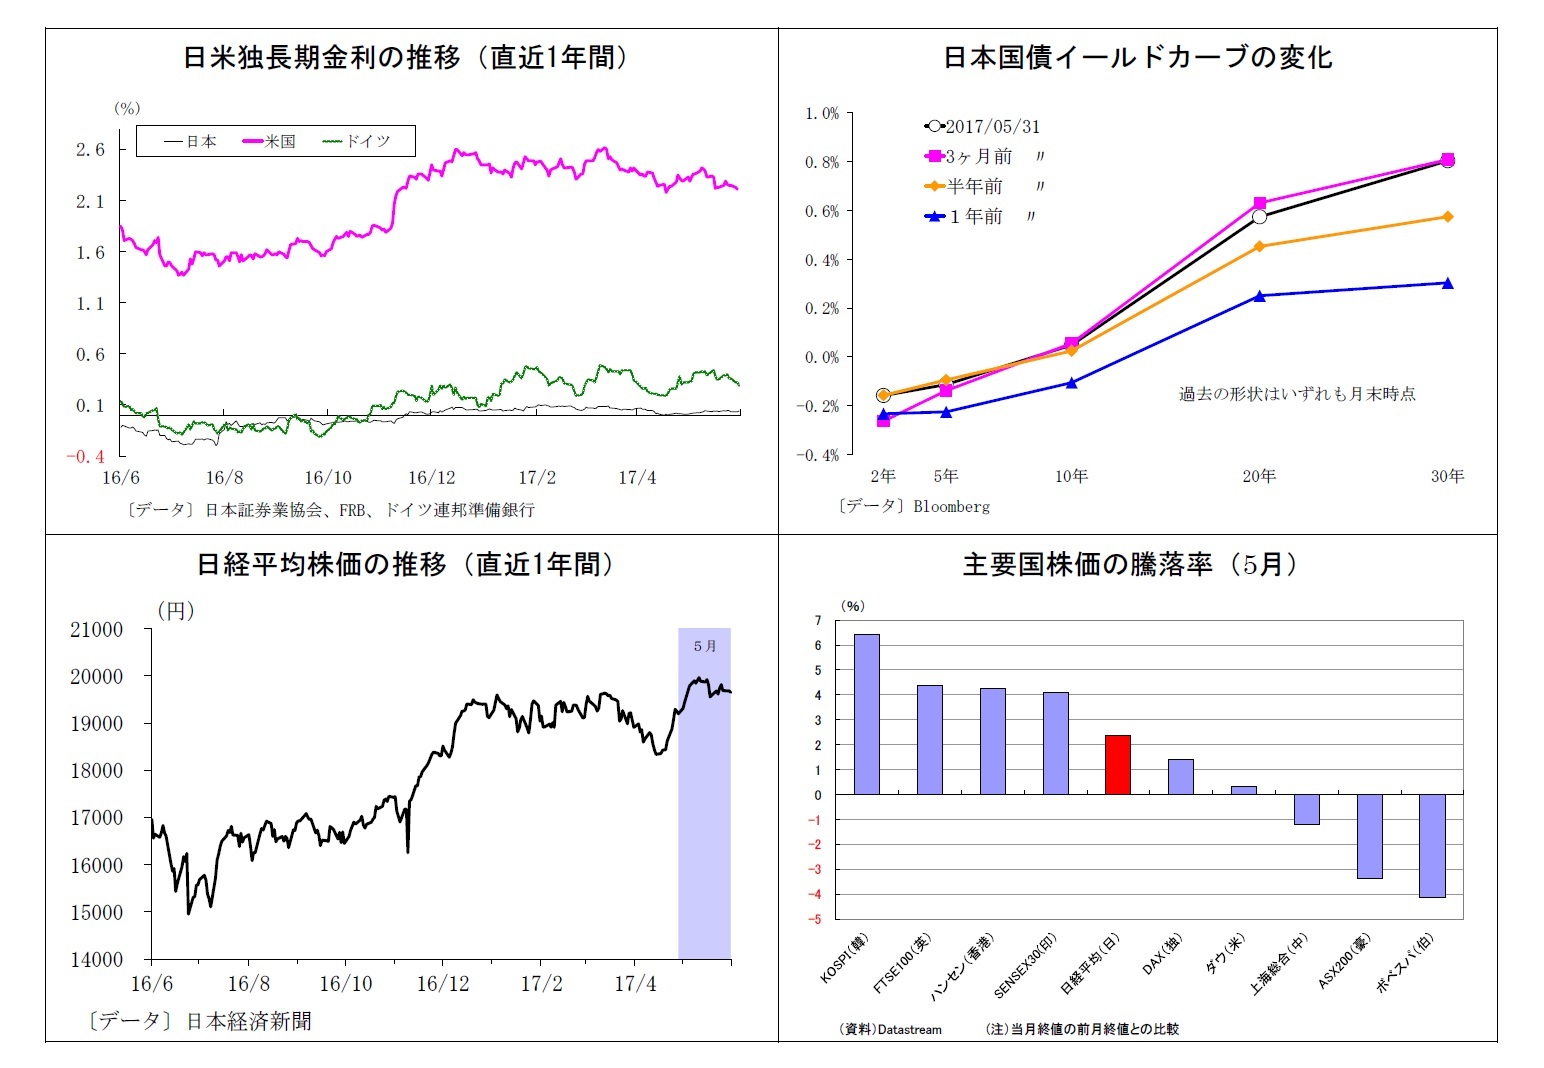 日米独長期金利の推移（直近1年間）/日本国債イールドカーブの変化/日経平均株価の推移（直近1年間）/主要国株価の騰落率（5月）